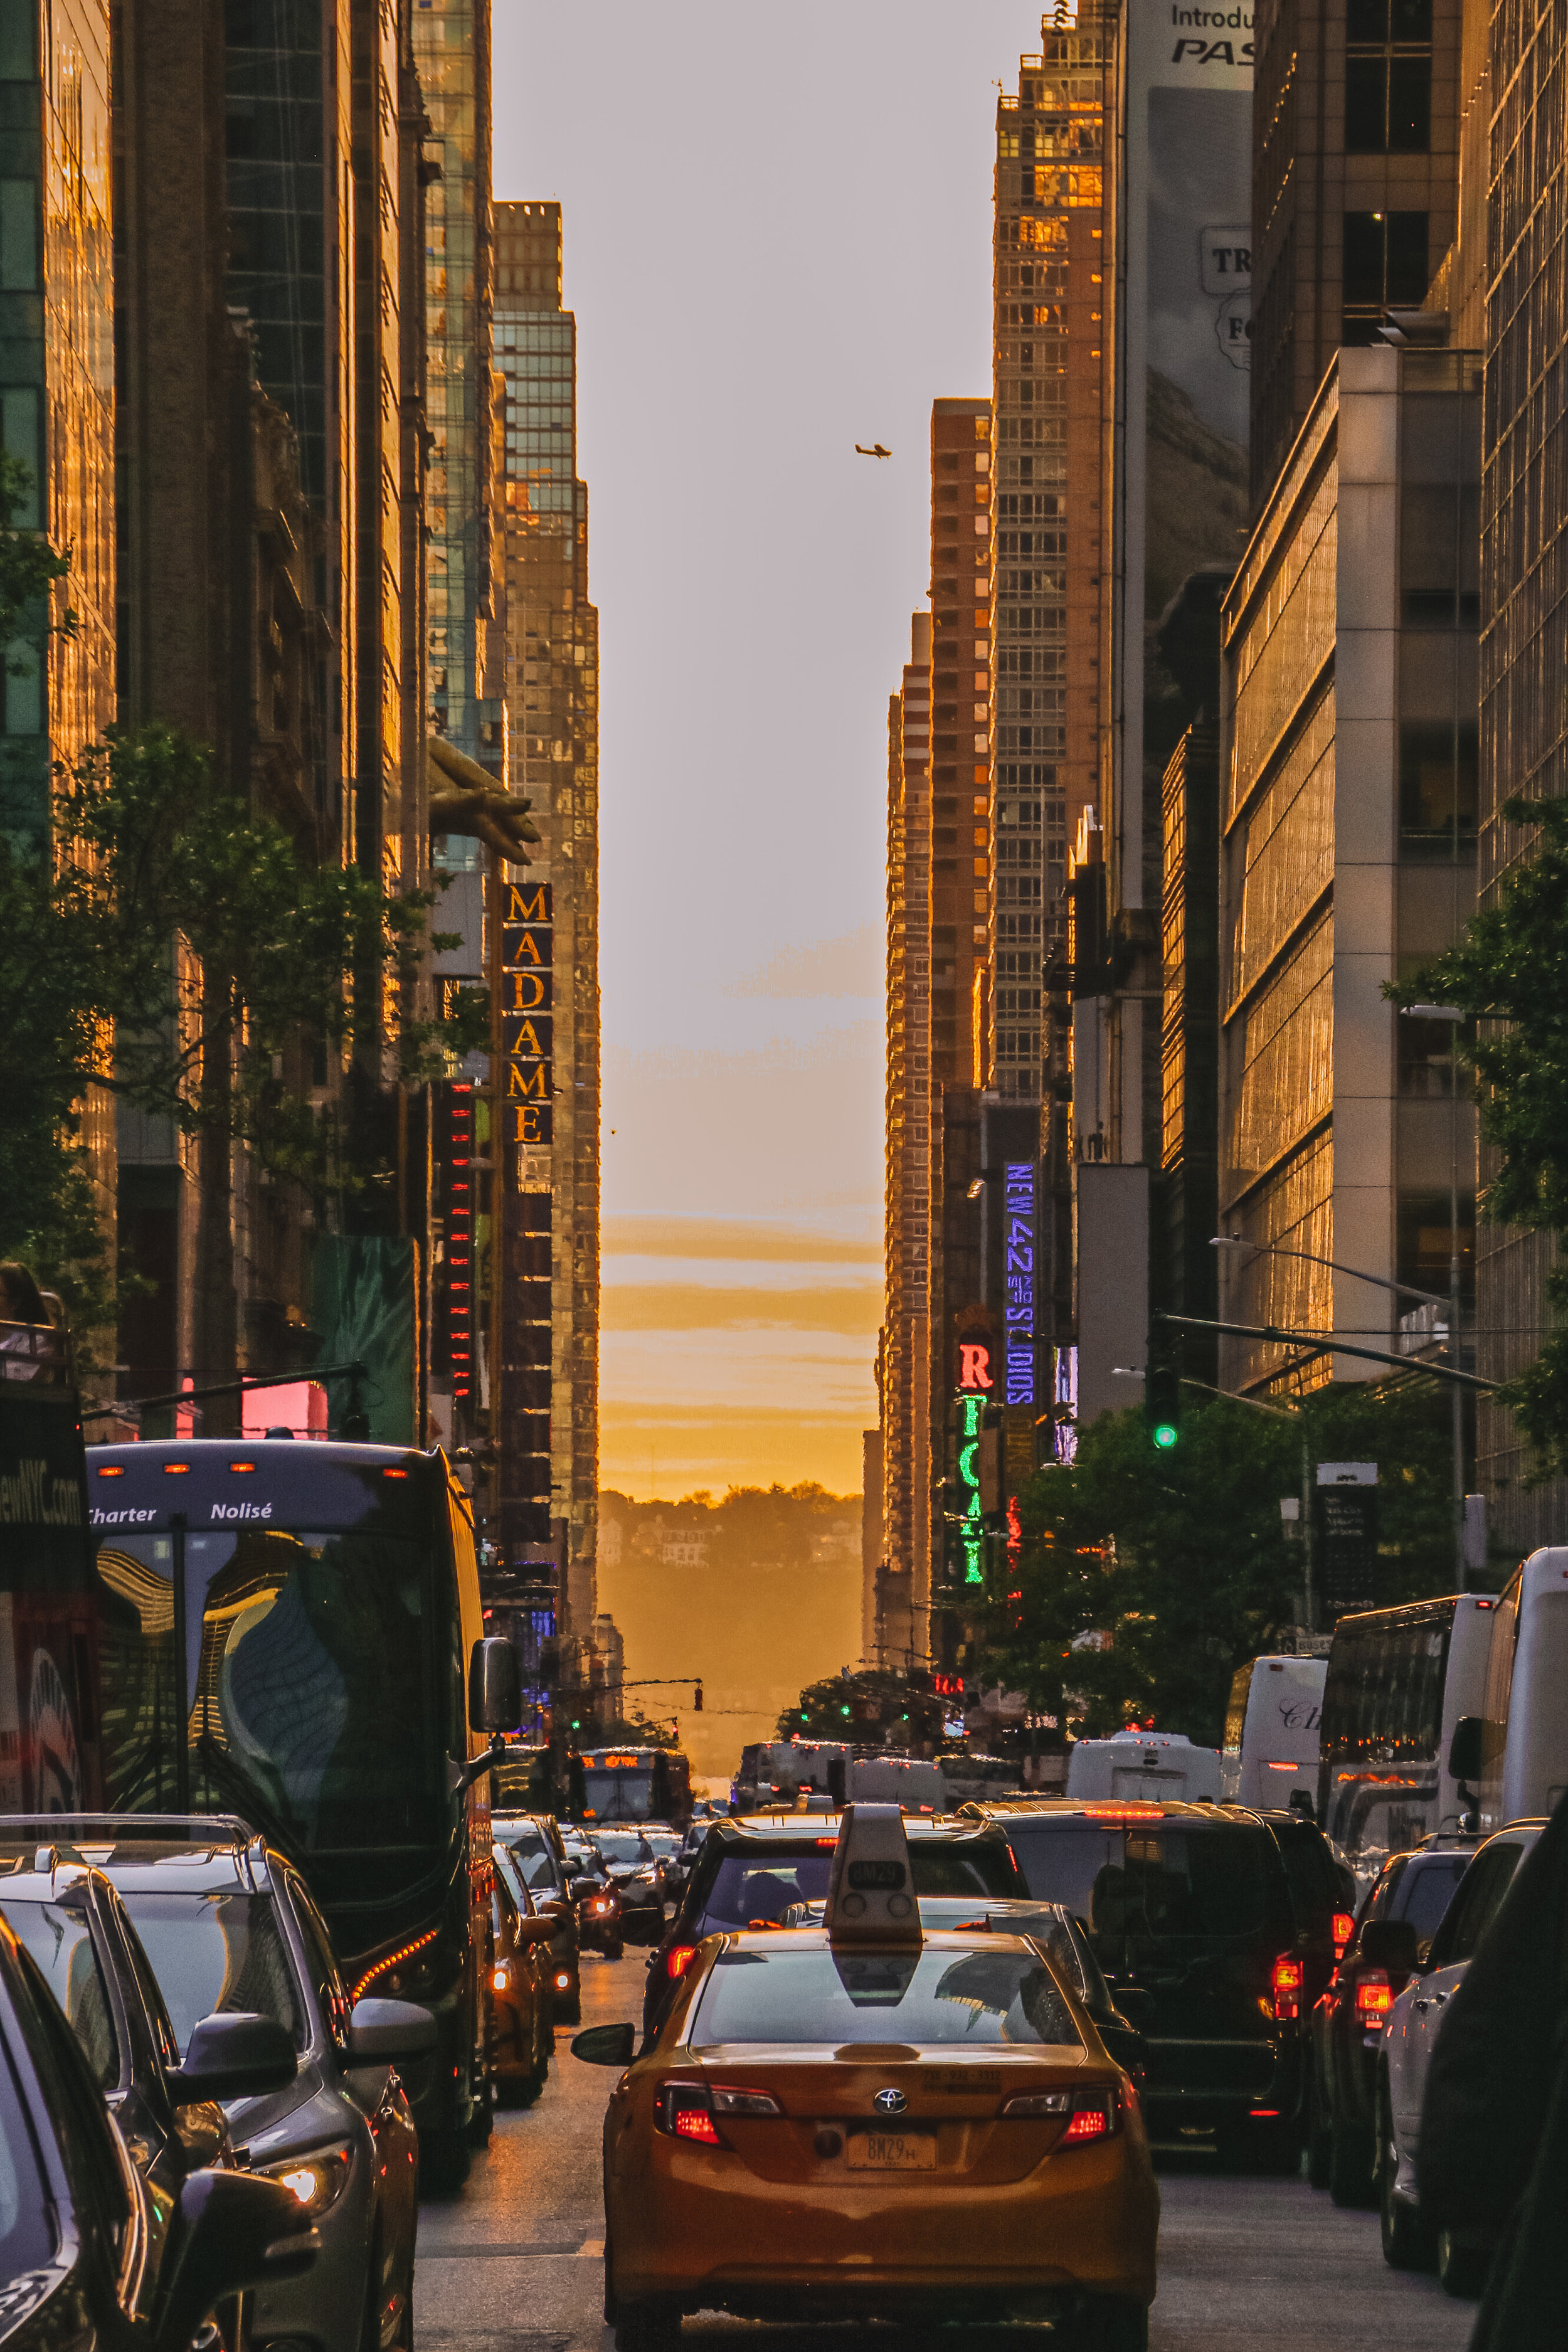 New York sunset, street view